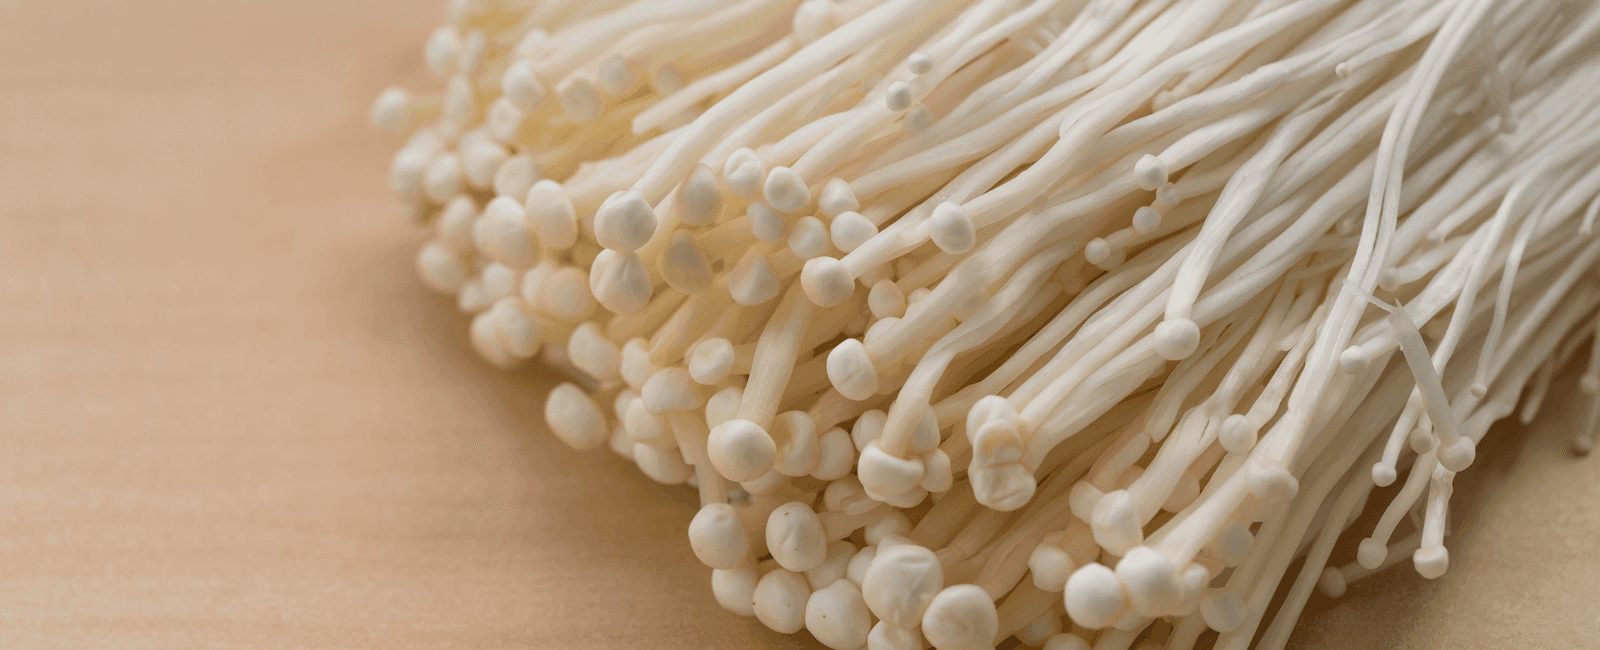 Enoki Mushrooms Linked to Listeria Outbreak